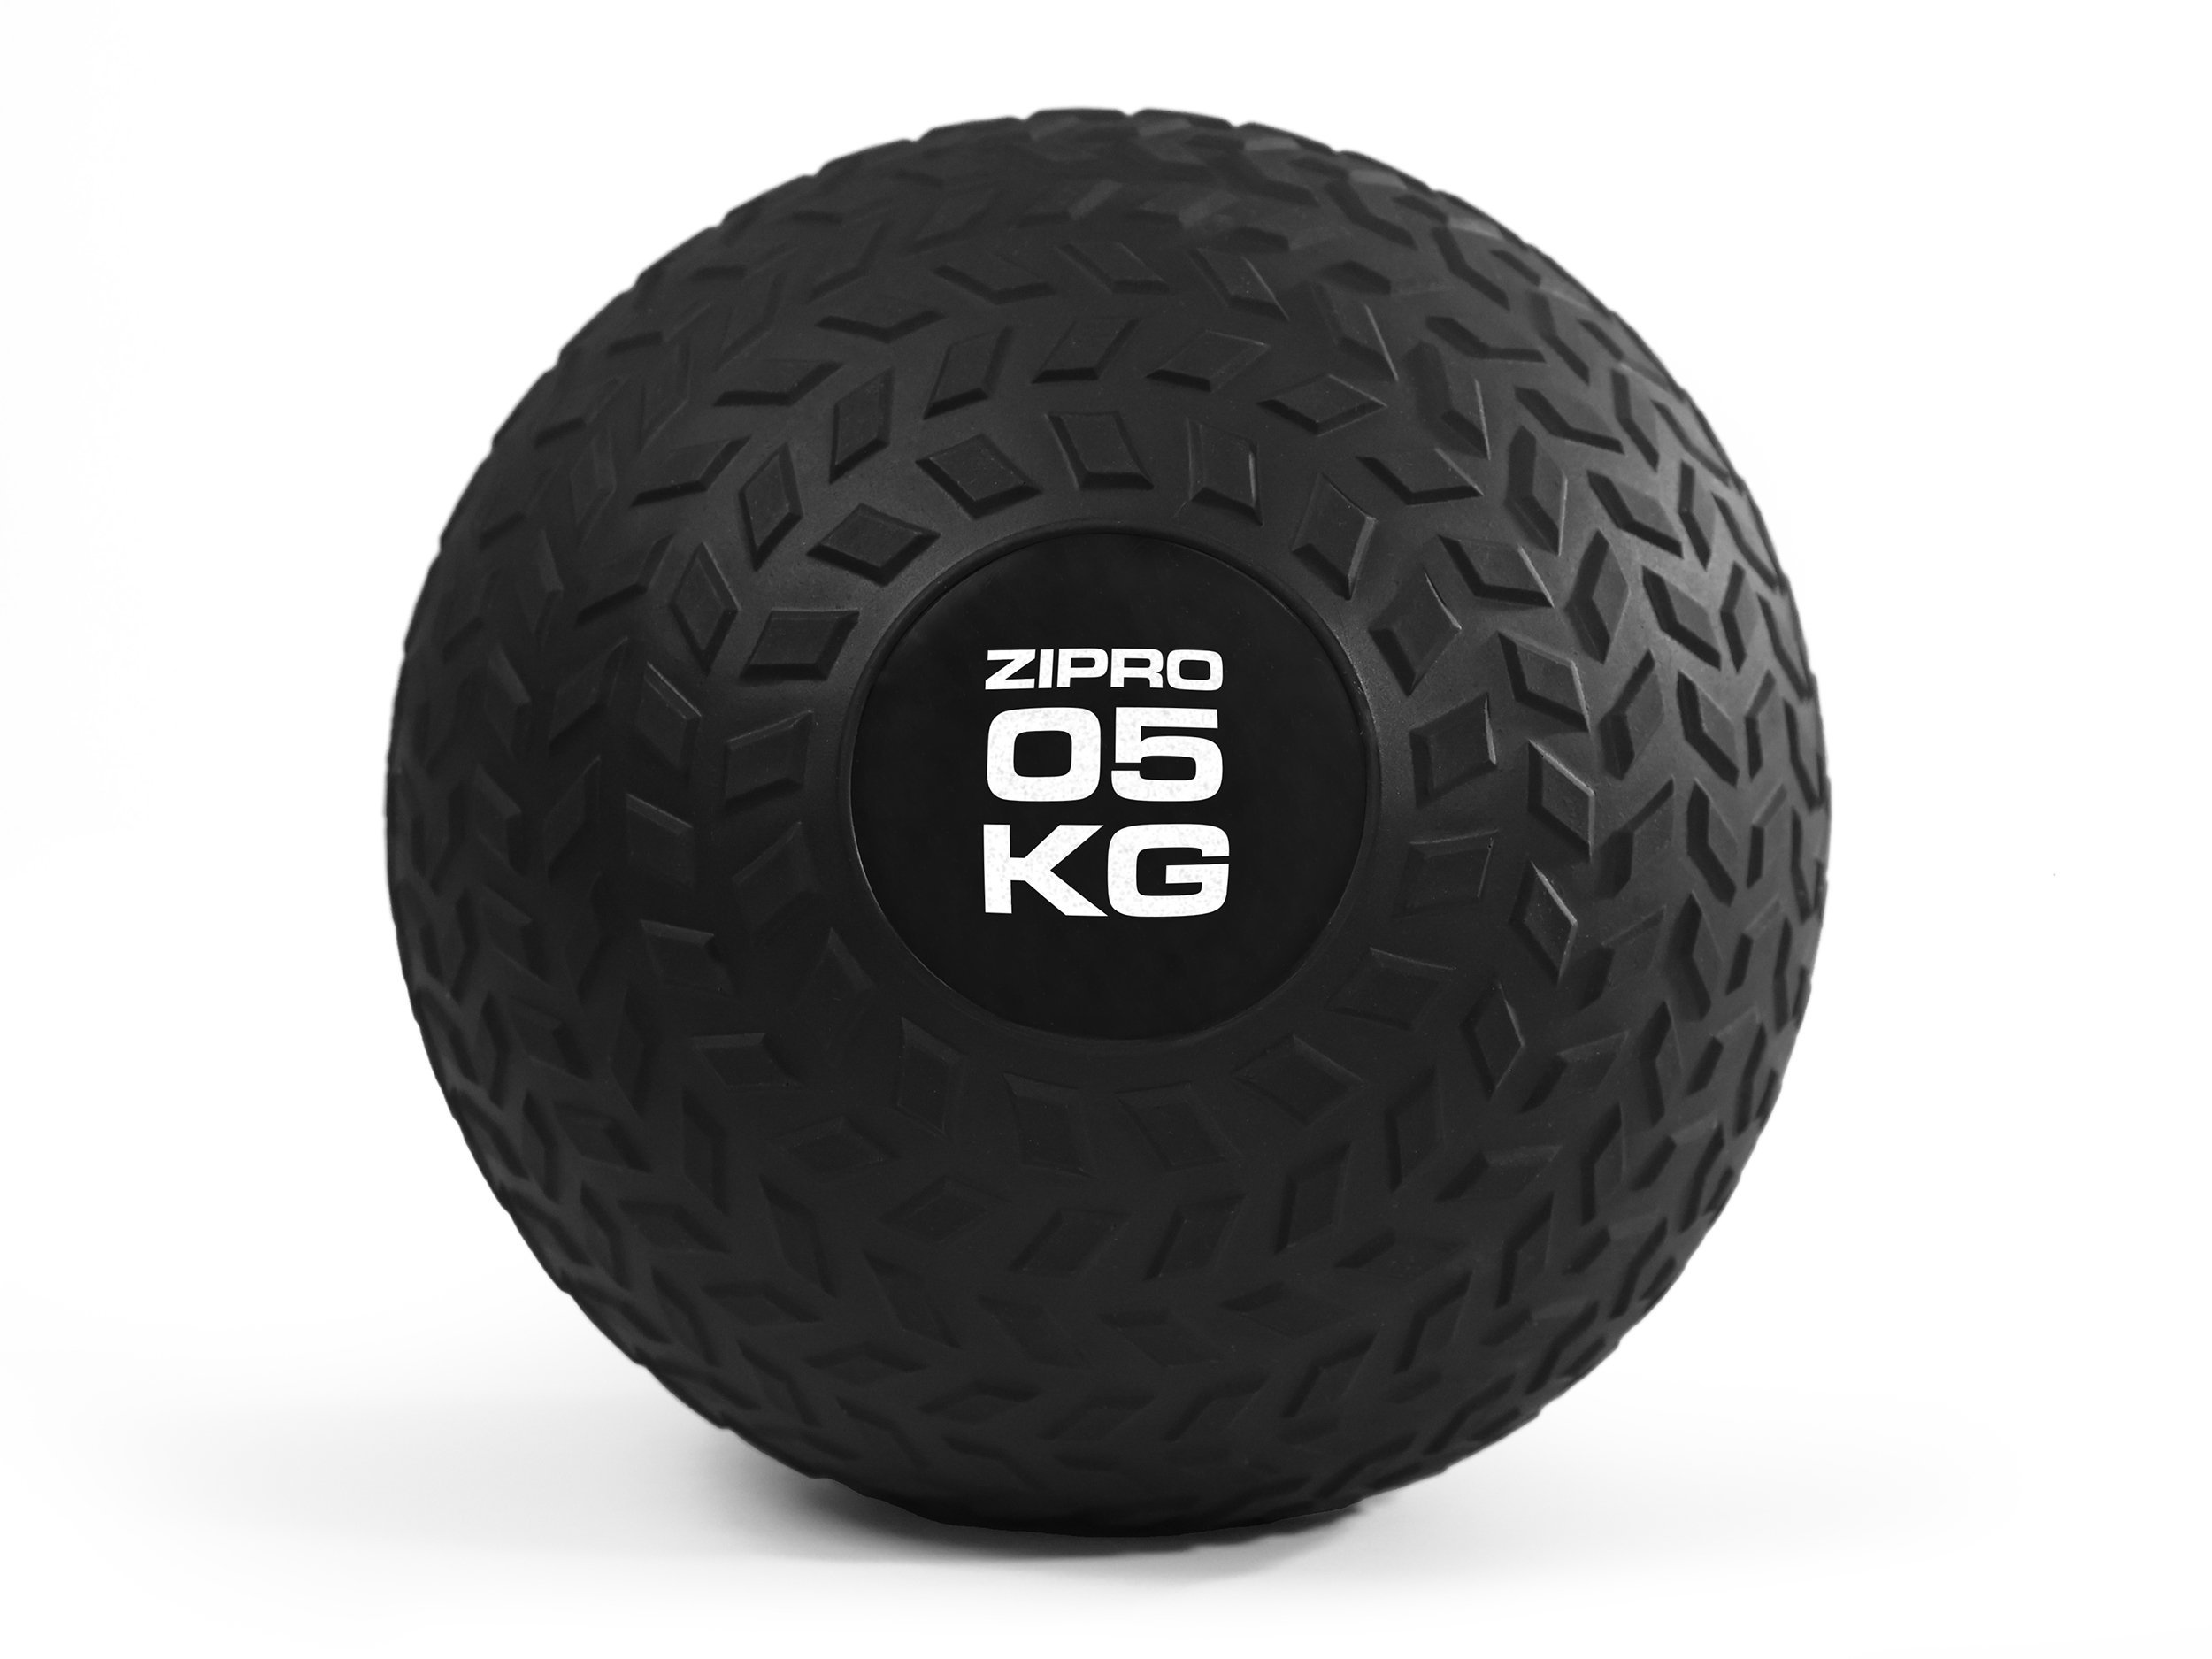 Zipro Minge Medicinala Slam Ball 5 kg